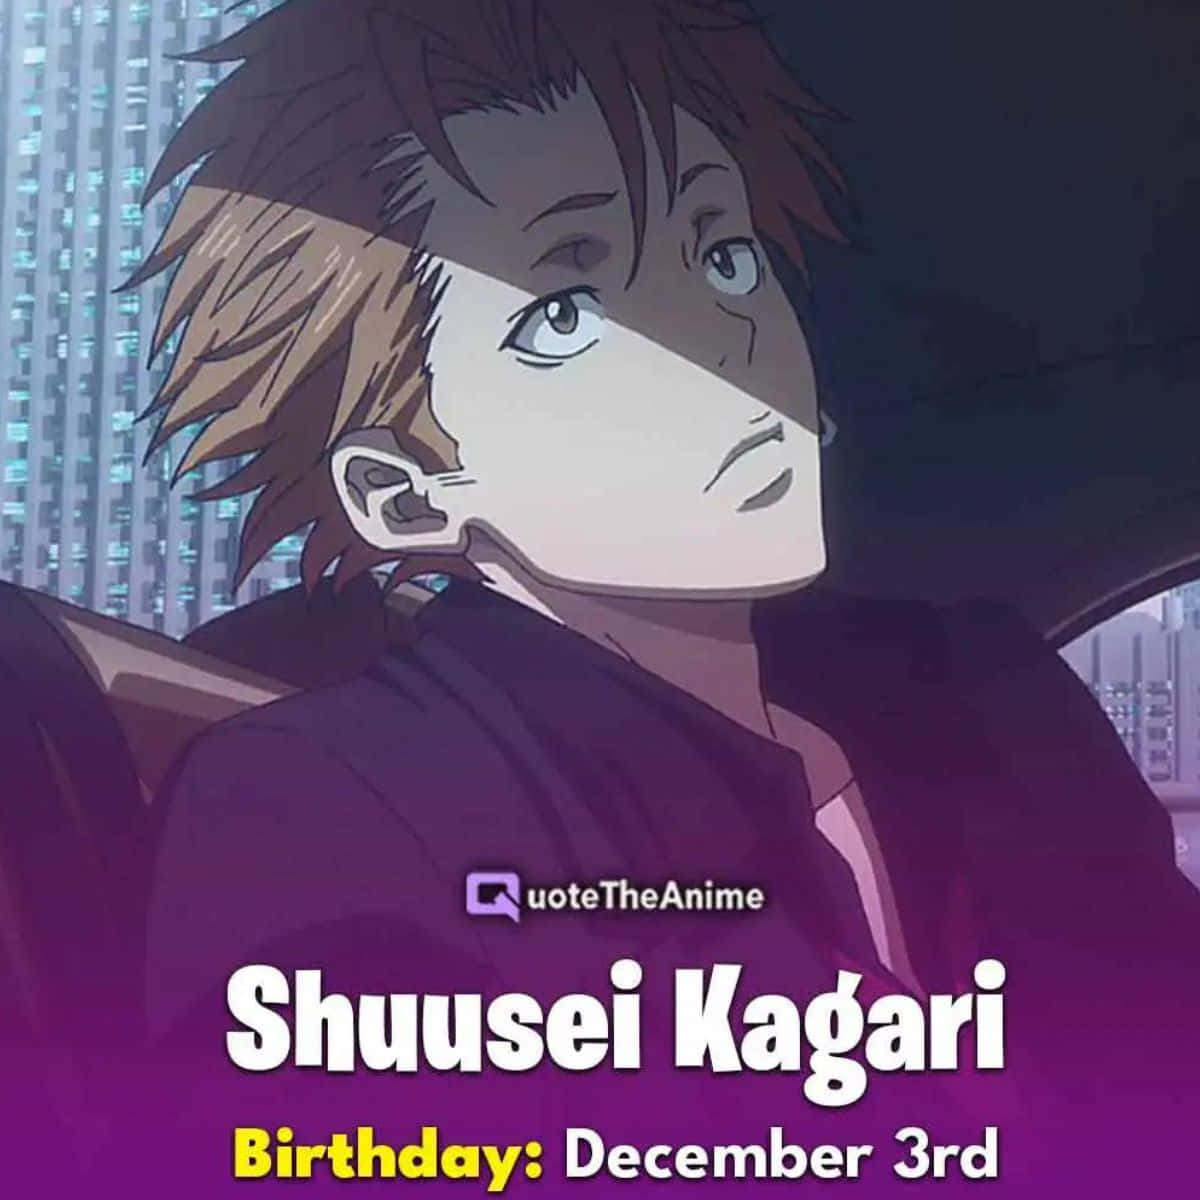 Shusei Kagari, Enforcer from the anime Psycho-Pass Wallpaper